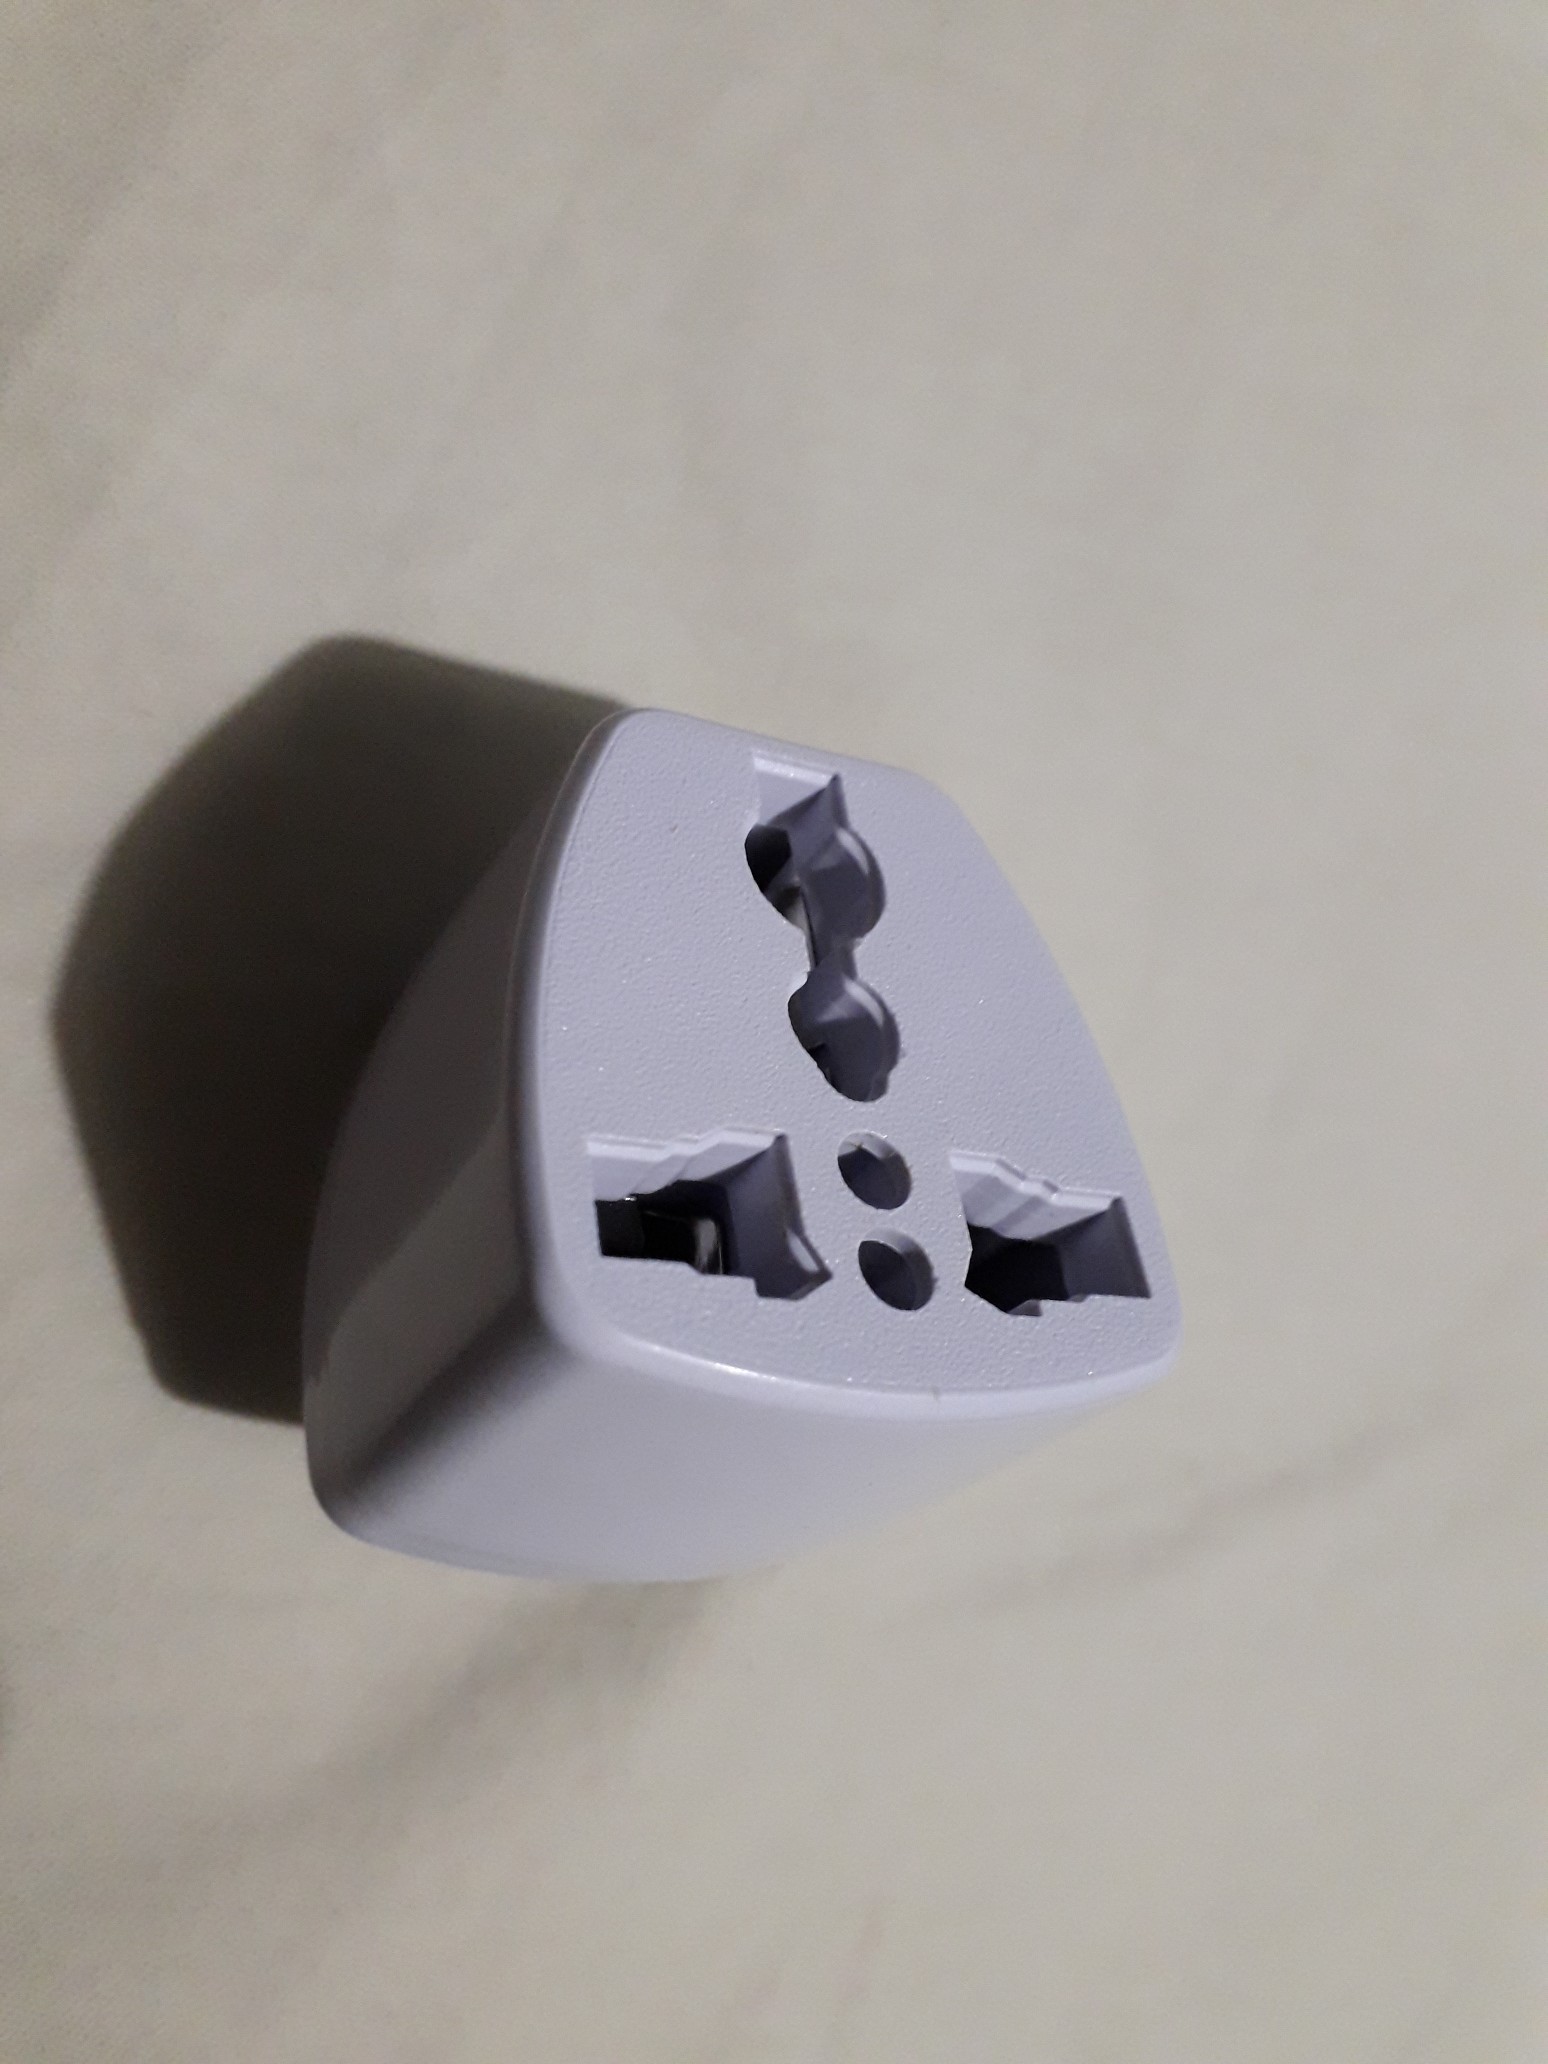 accesorios para electronica - adaptador de corriente de enchufe de el reino unido a enchufe